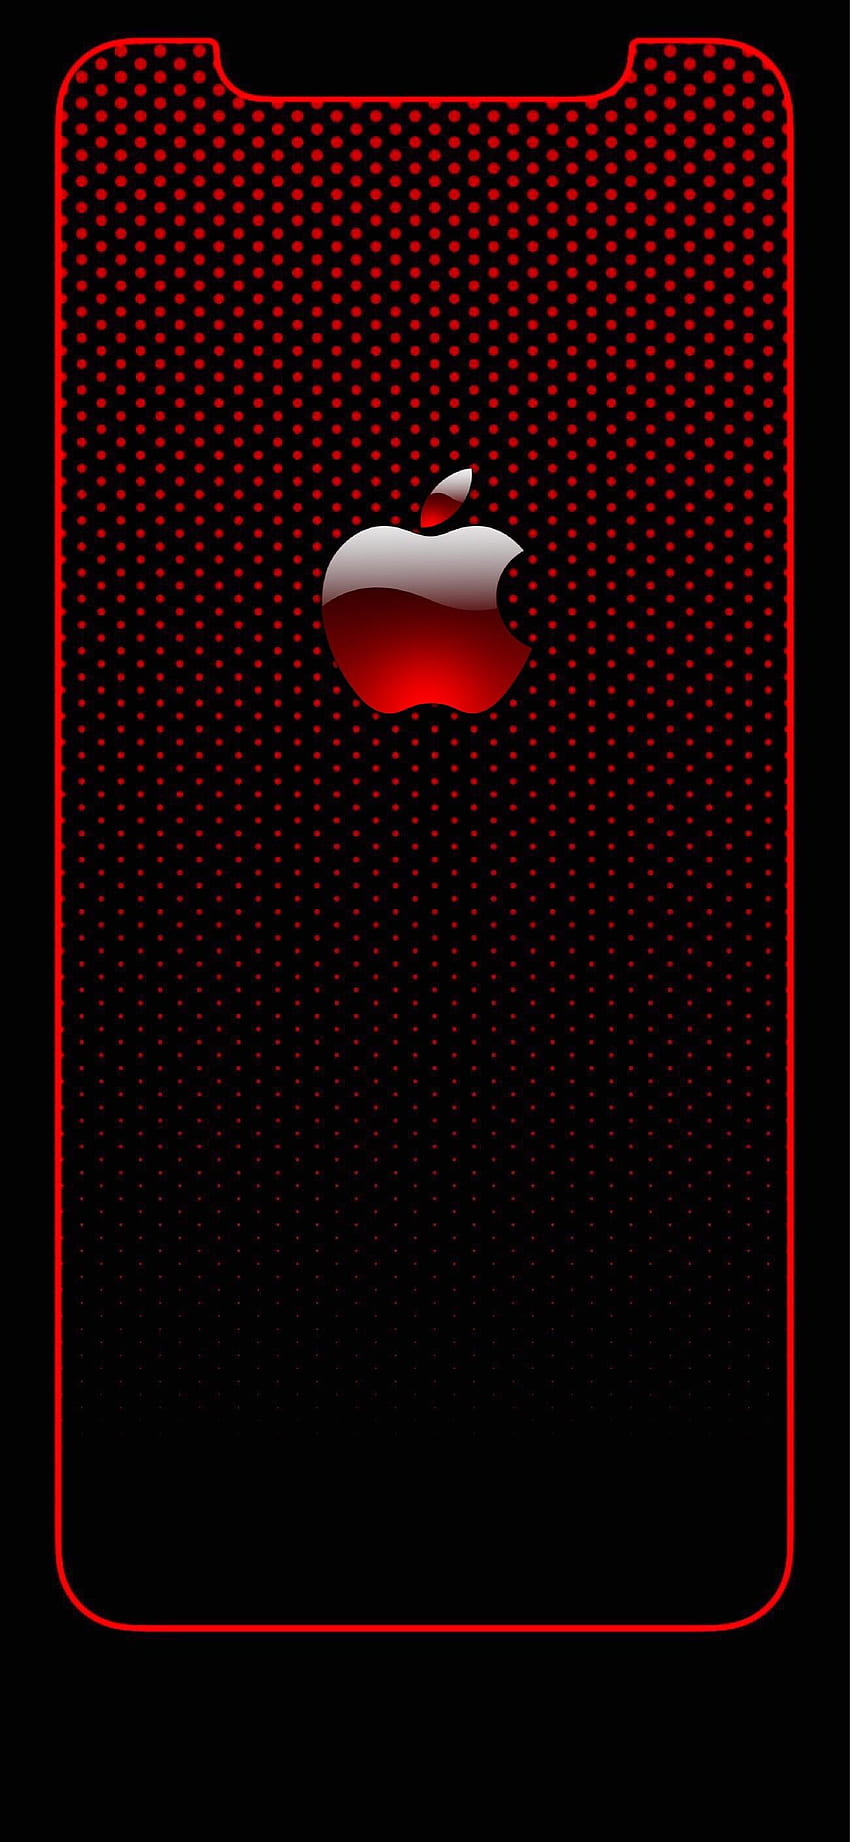 Apple red Apple logo Computers Mac black 1080P wallpaper hdwallpaper  desktop  Apple logo Black apple logo Apple iphone wallpaper hd